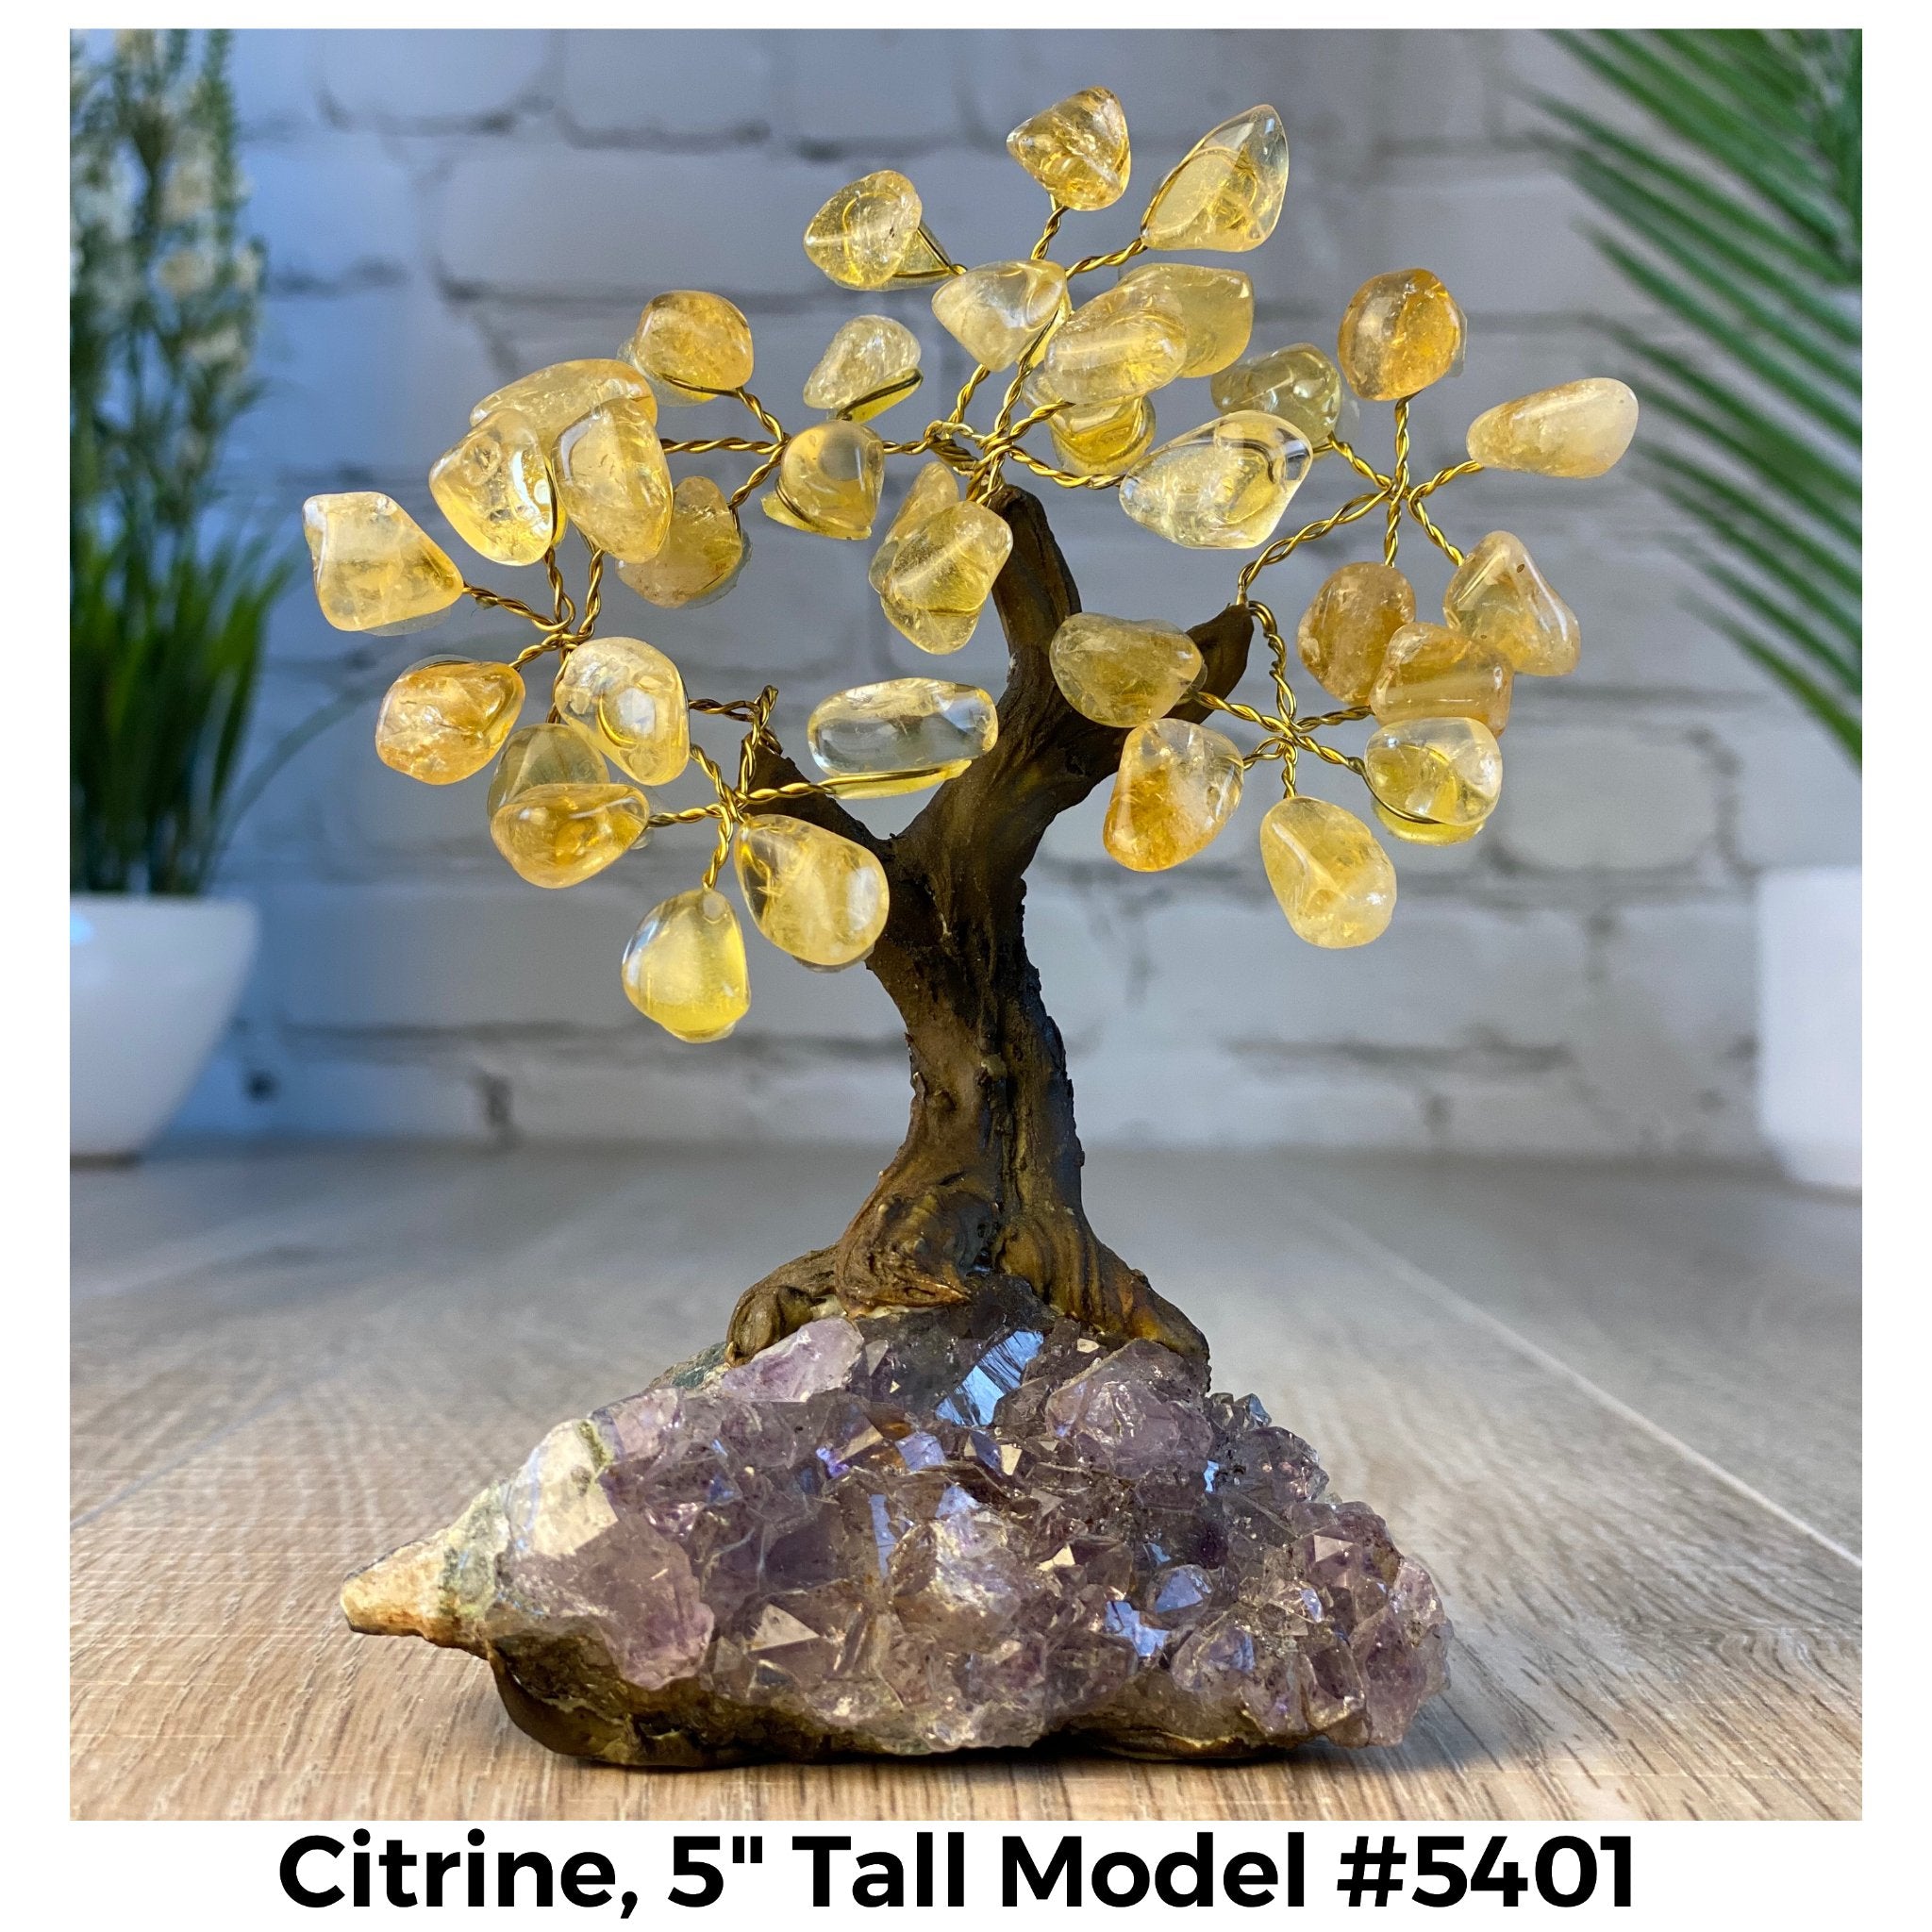 Citrine 5" Tall Handmade Gemstone Tree on a Crystal base, 35 Gems #5401CITR - Brazil GemsBrazil GemsCitrine 5" Tall Handmade Gemstone Tree on a Crystal base, 35 Gems #5401CITRGemstone Trees5401CITR